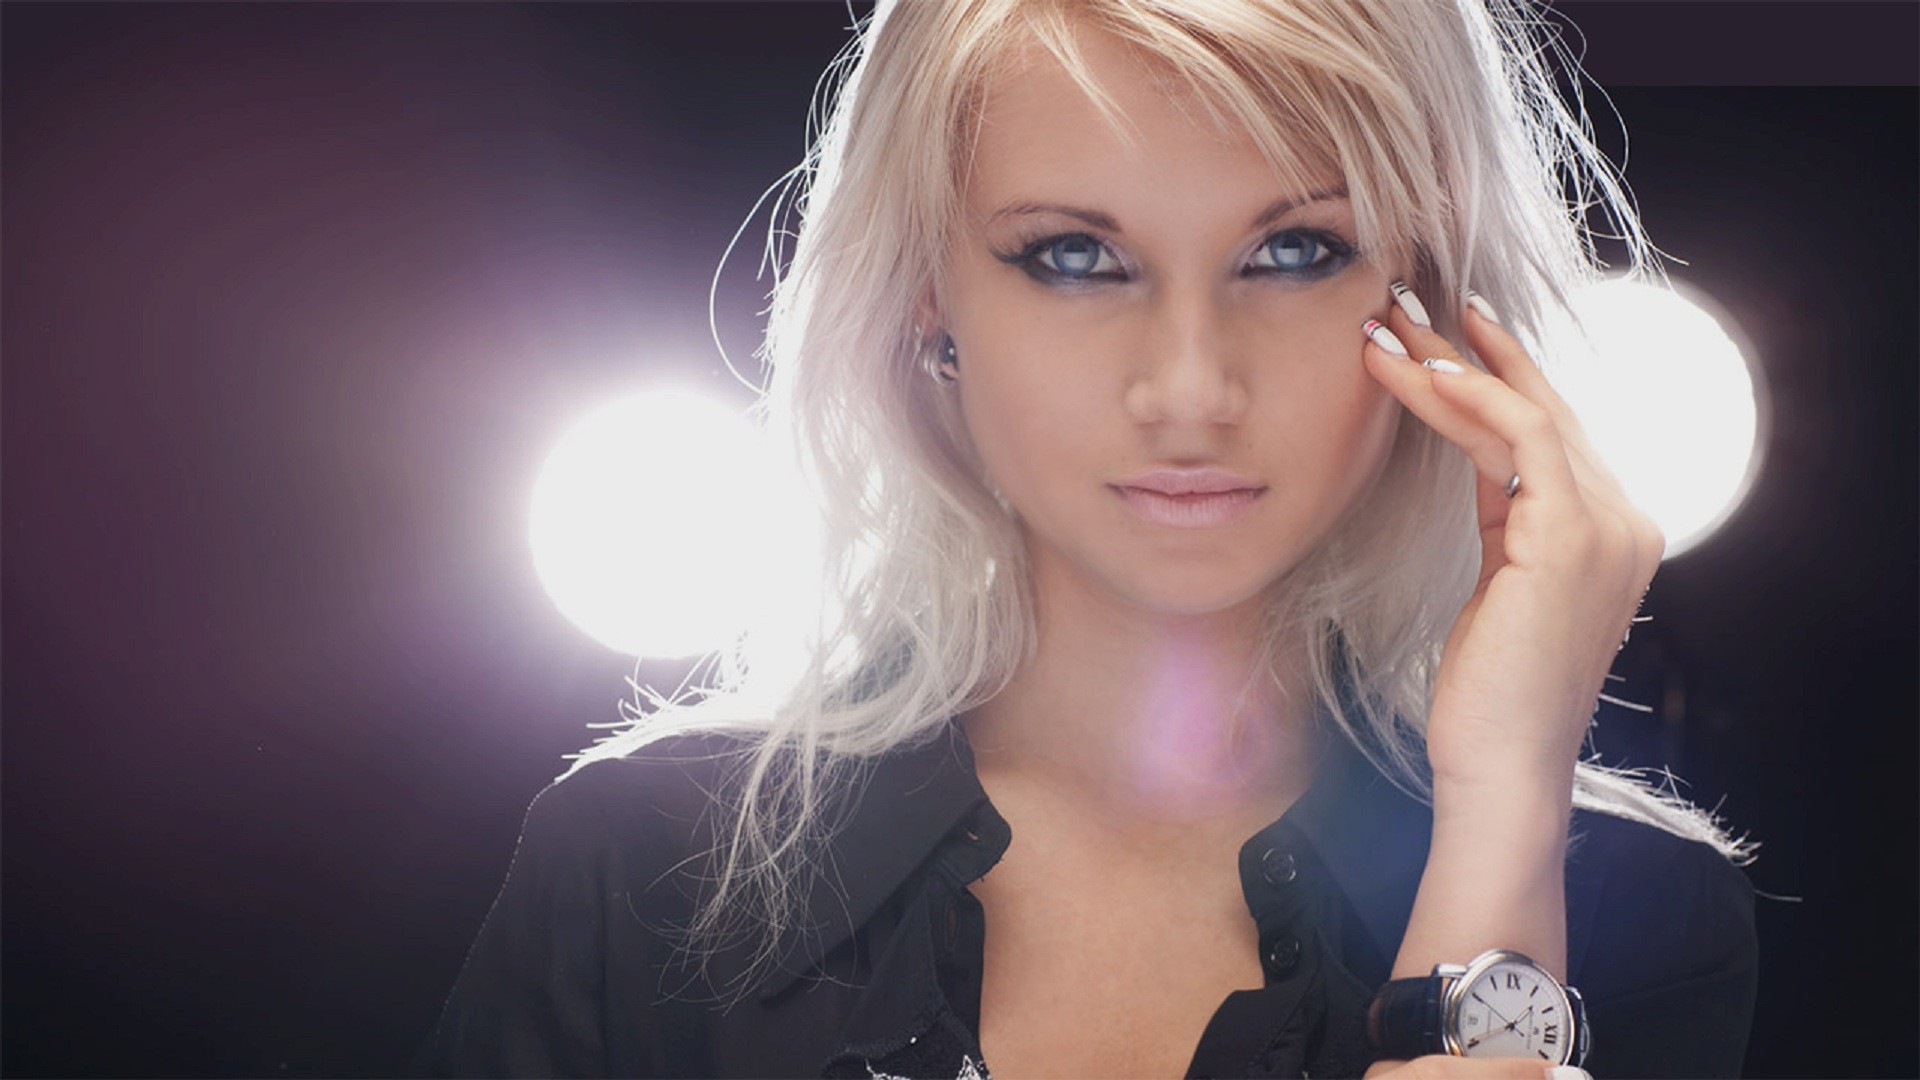 blondes, women, watches, faces, Melissa Maloun - desktop wallpaper